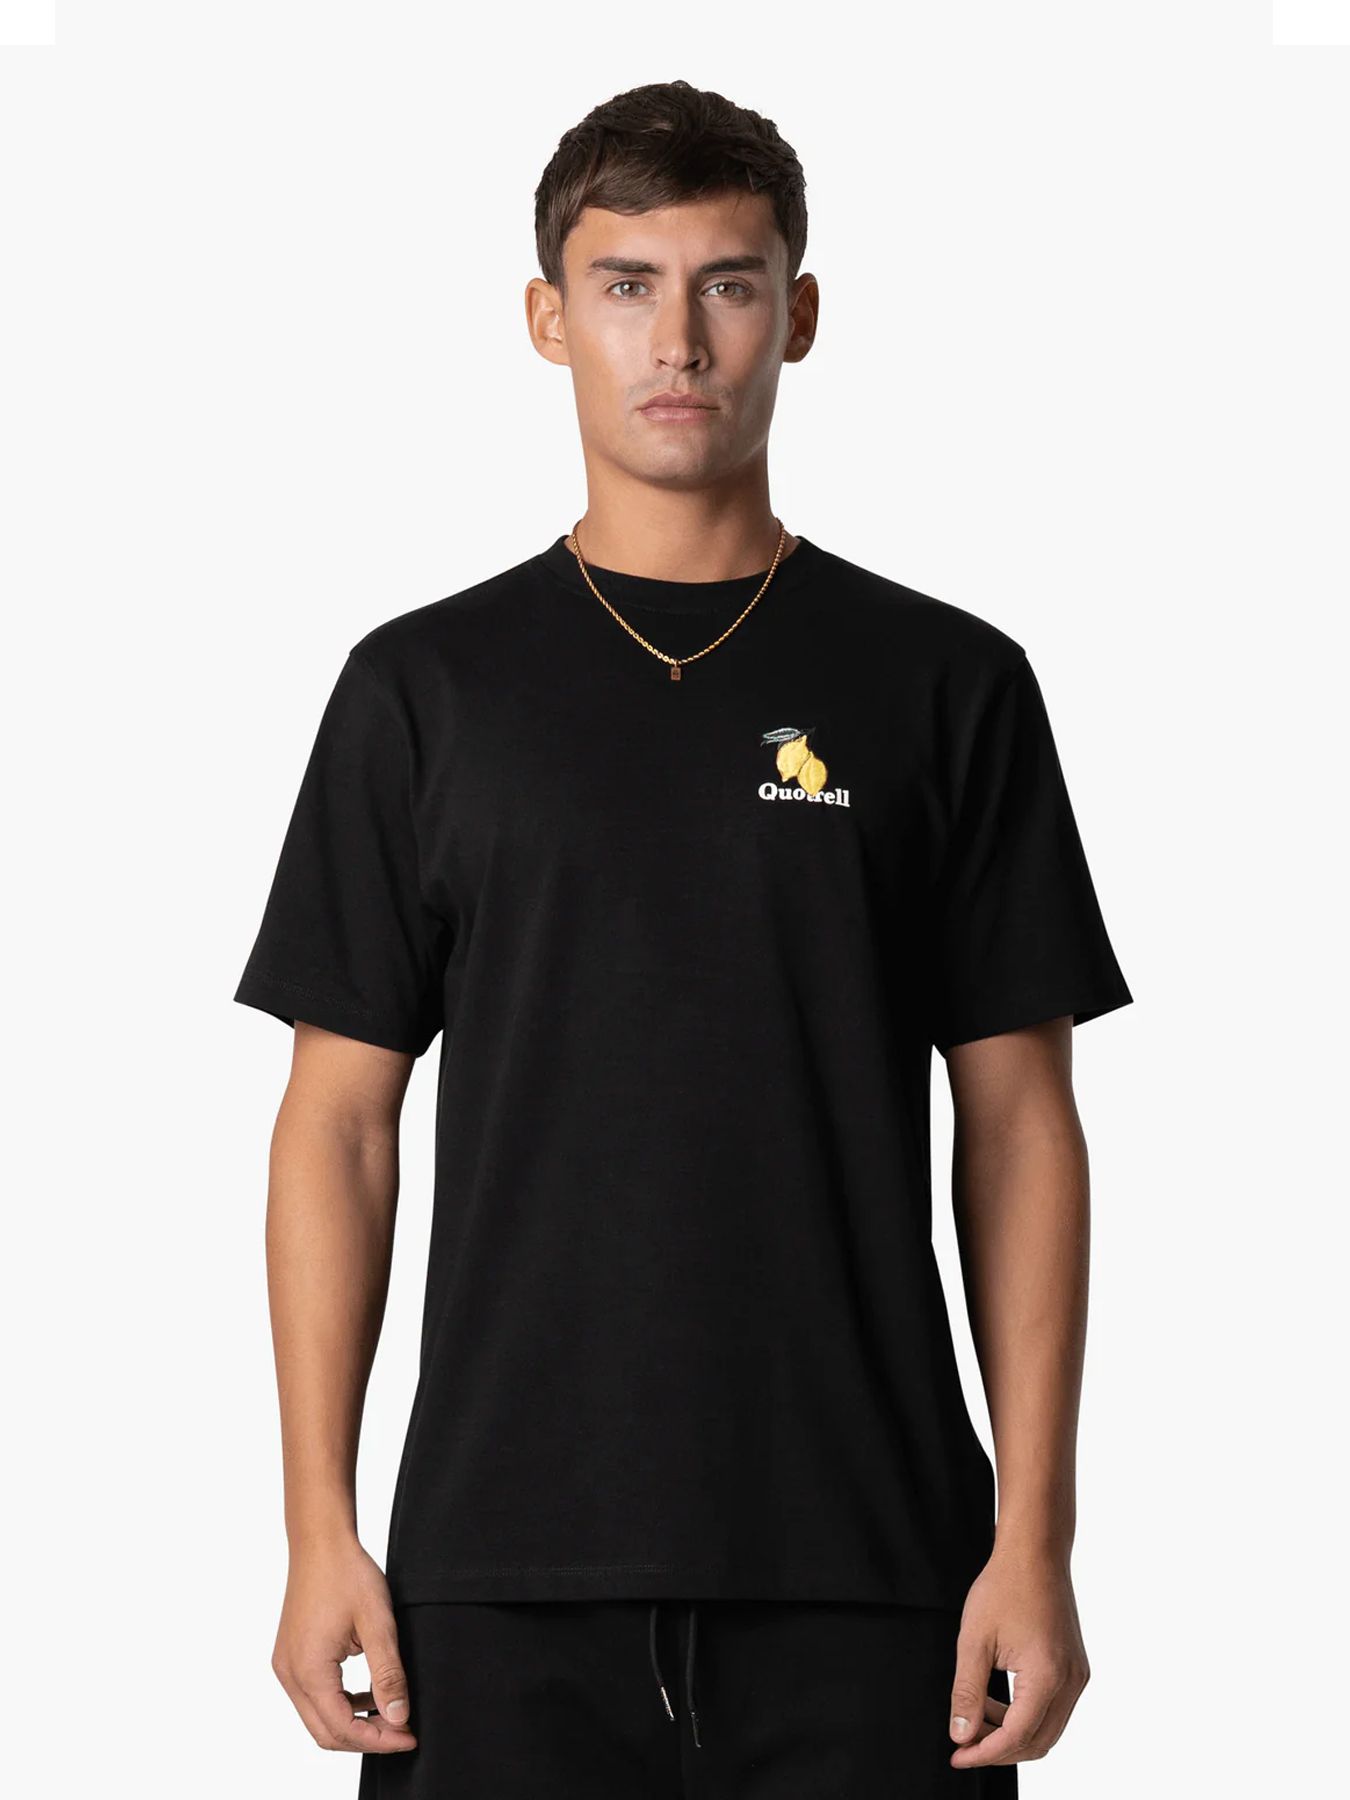 Quotrell Limone t-shirt Black/White 2900147486065